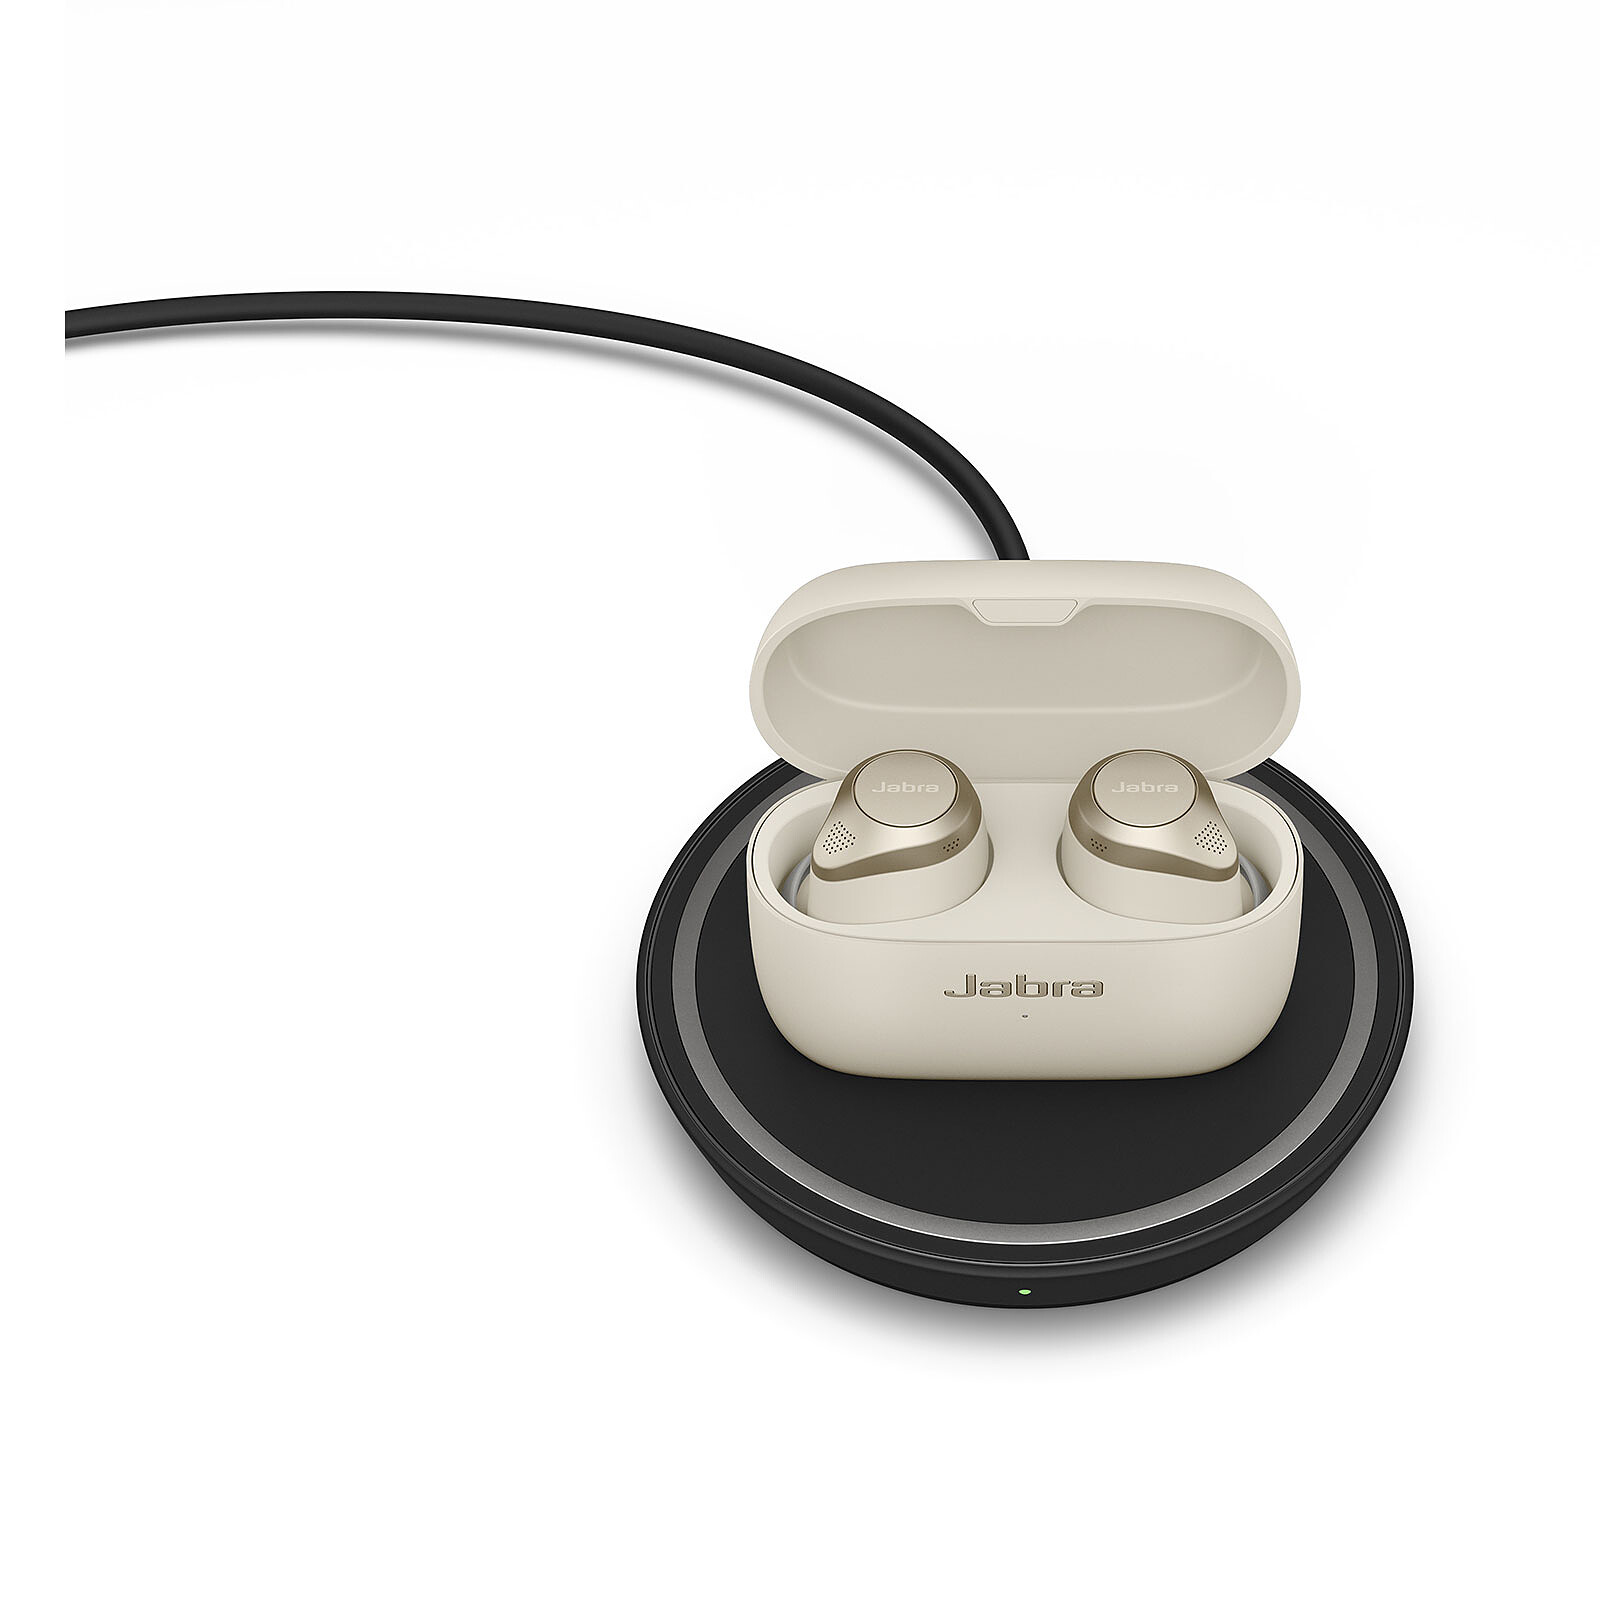 Jabra Elite 85t Beige - Headphones Jabra on LDLC